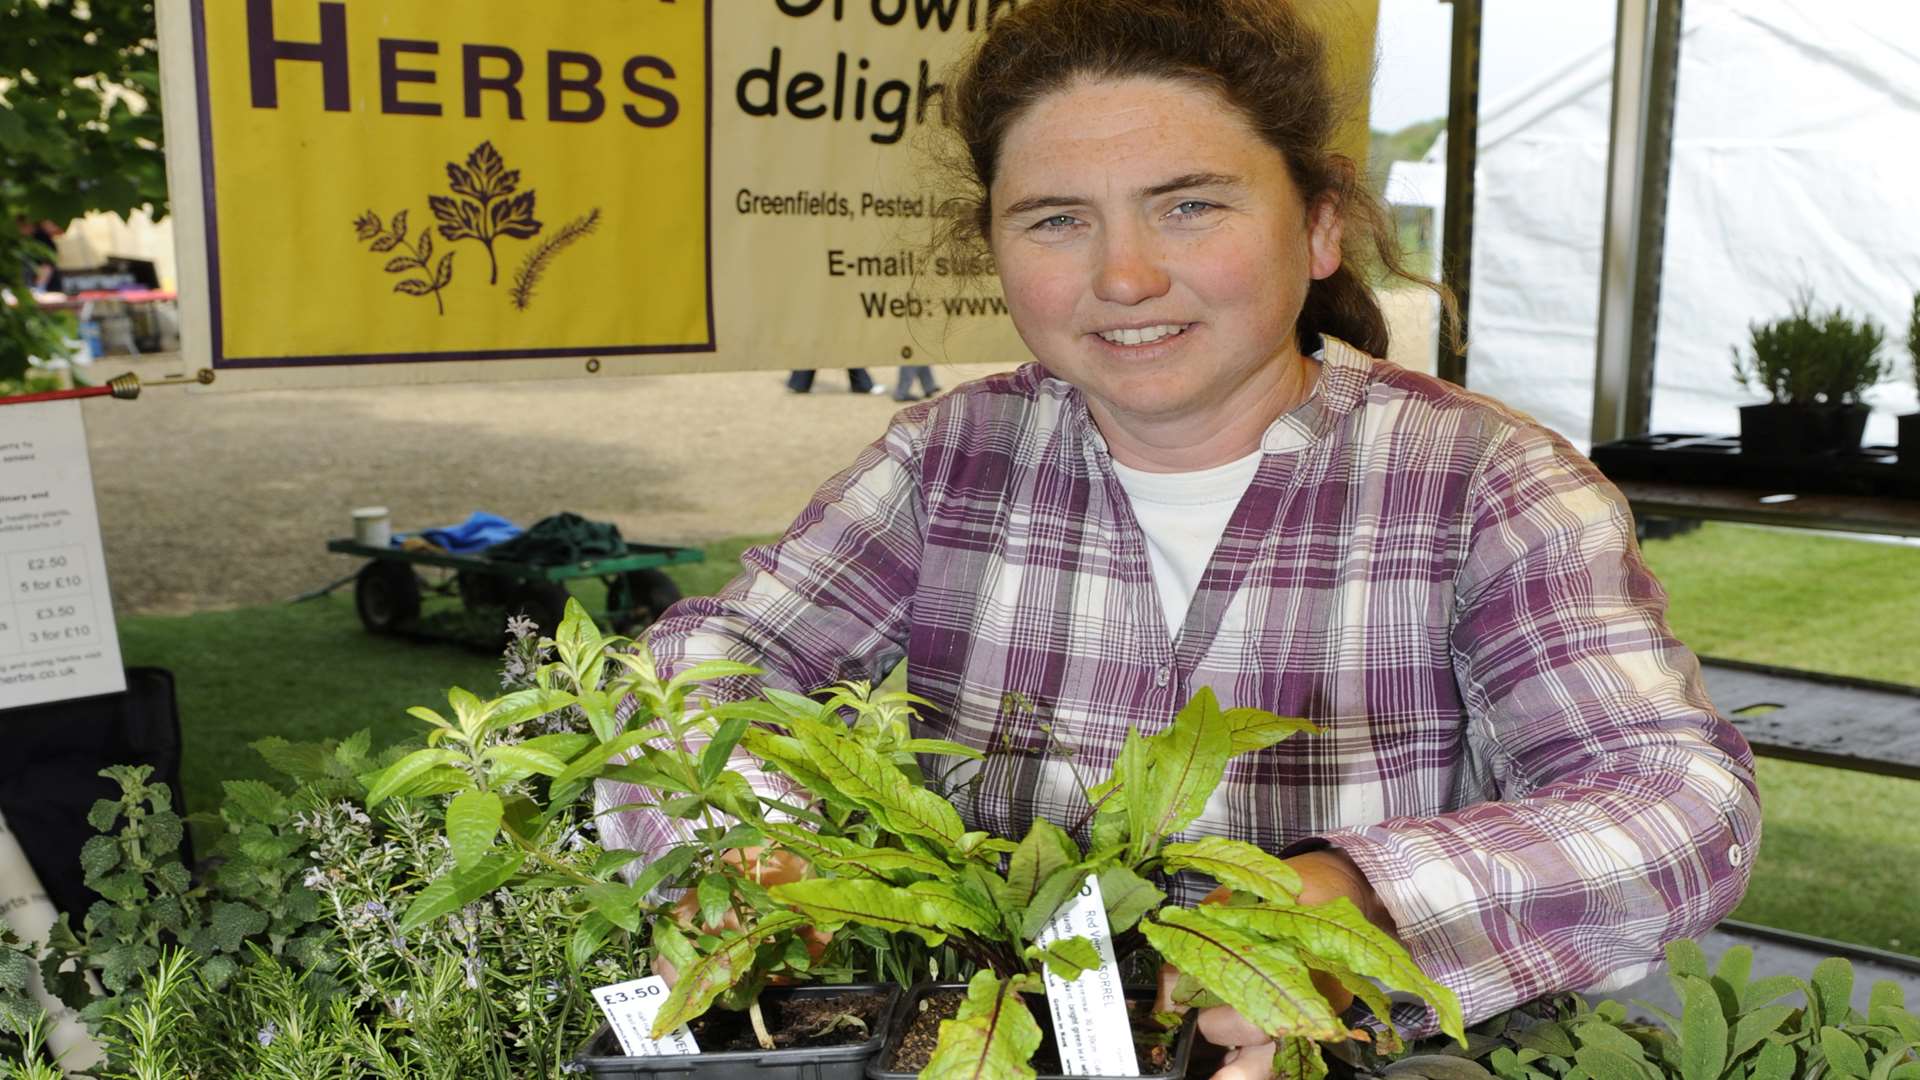 Susan Gollins with her herbs at Belmont Gardens in Faversham